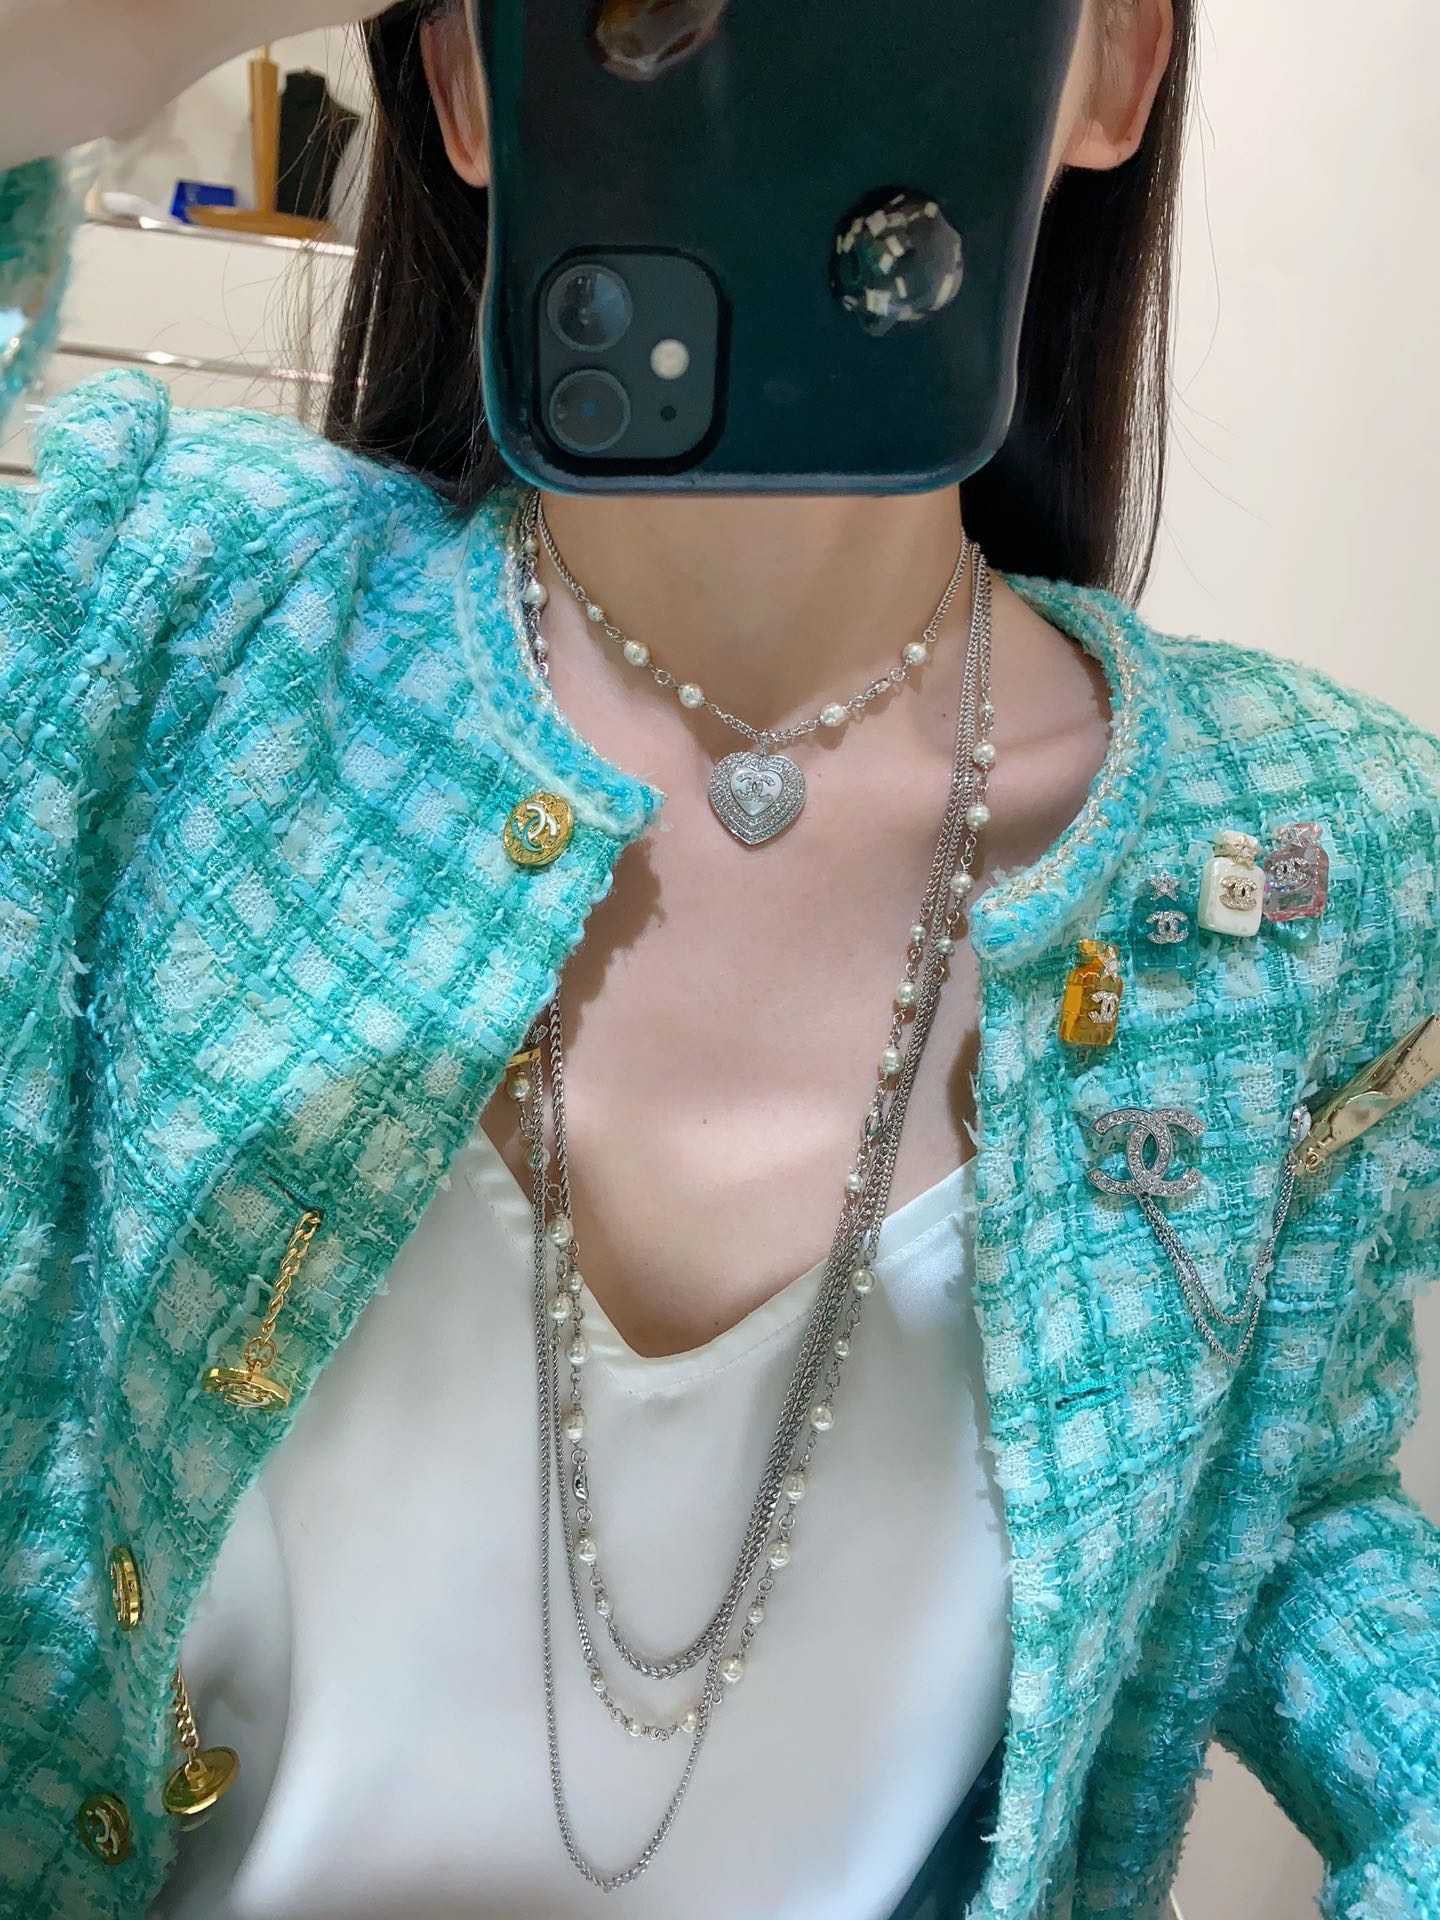 Chanel Jewelry Necklaces & Pendants UK 7 Star Replica